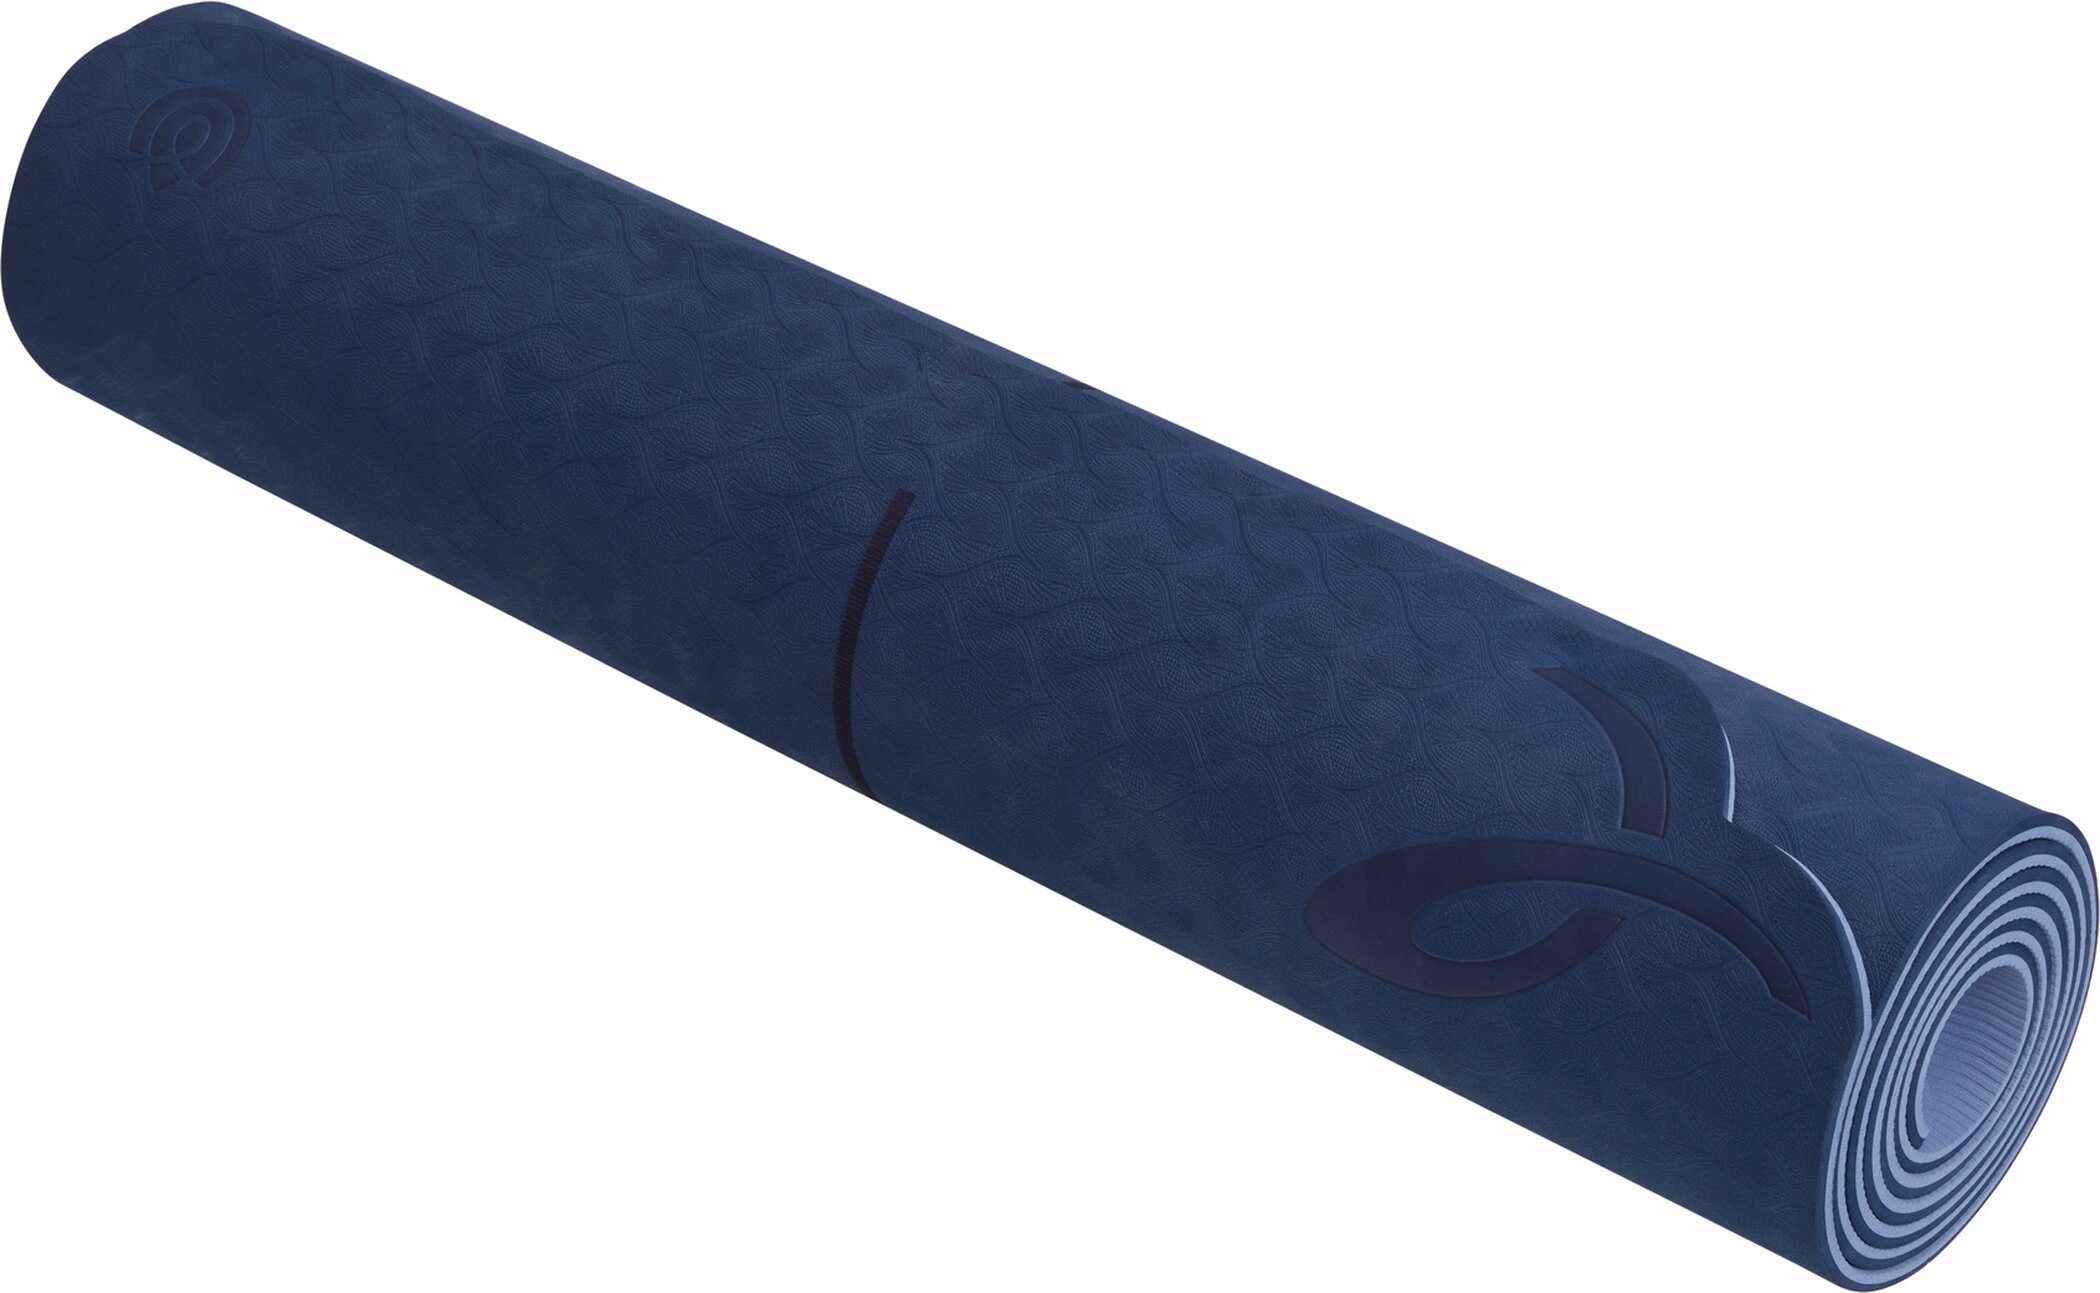 Free Mat Sportmatte Yoga Ux.-Yoga-Matte Energetics NAVY DARK/BLUE 1. PVC